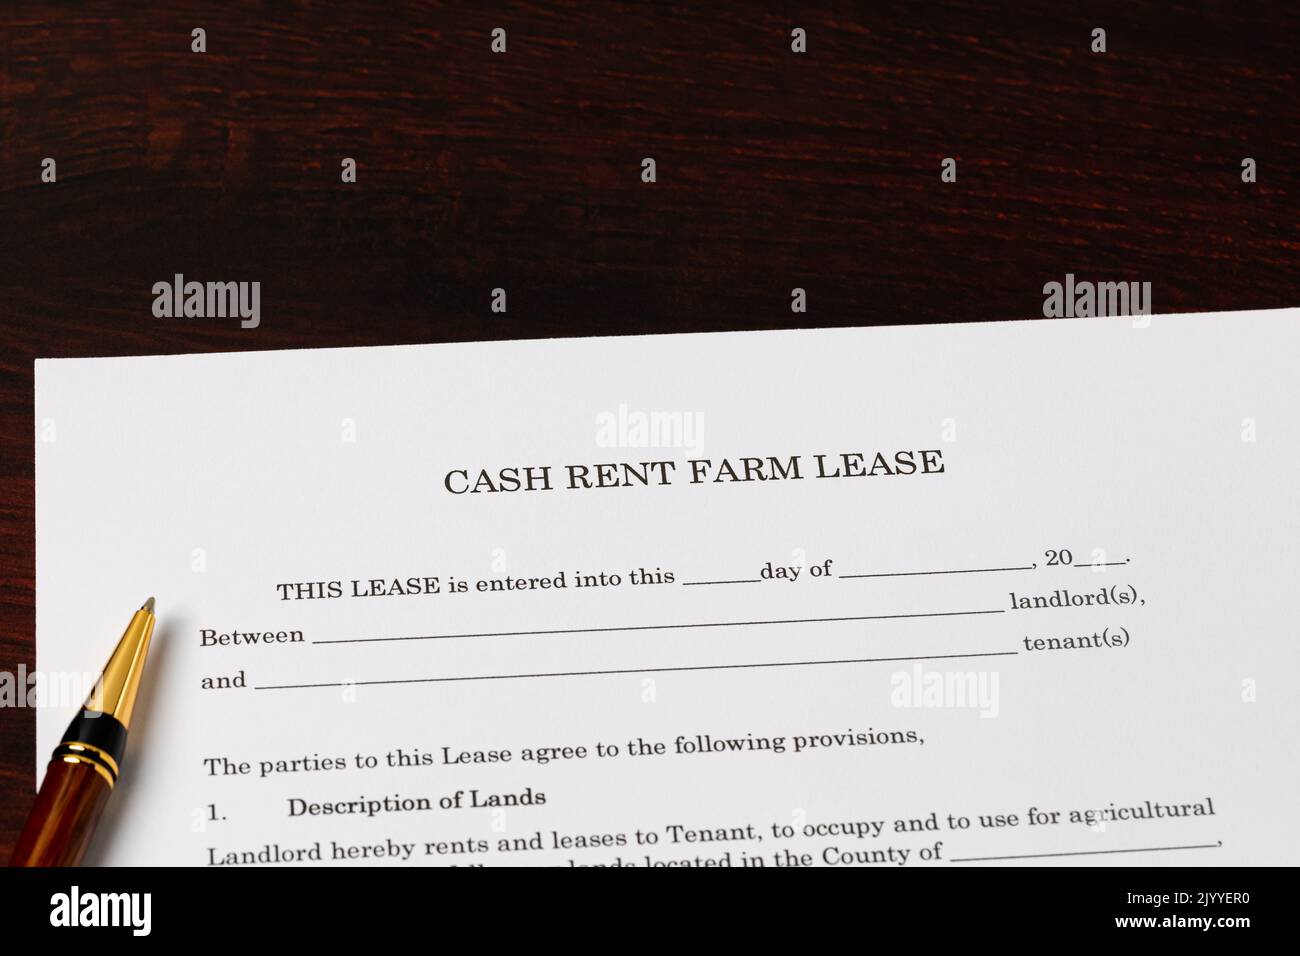 Cash rent farm lease document. Farming, agriculture and tenant farming concept. Stock Photo